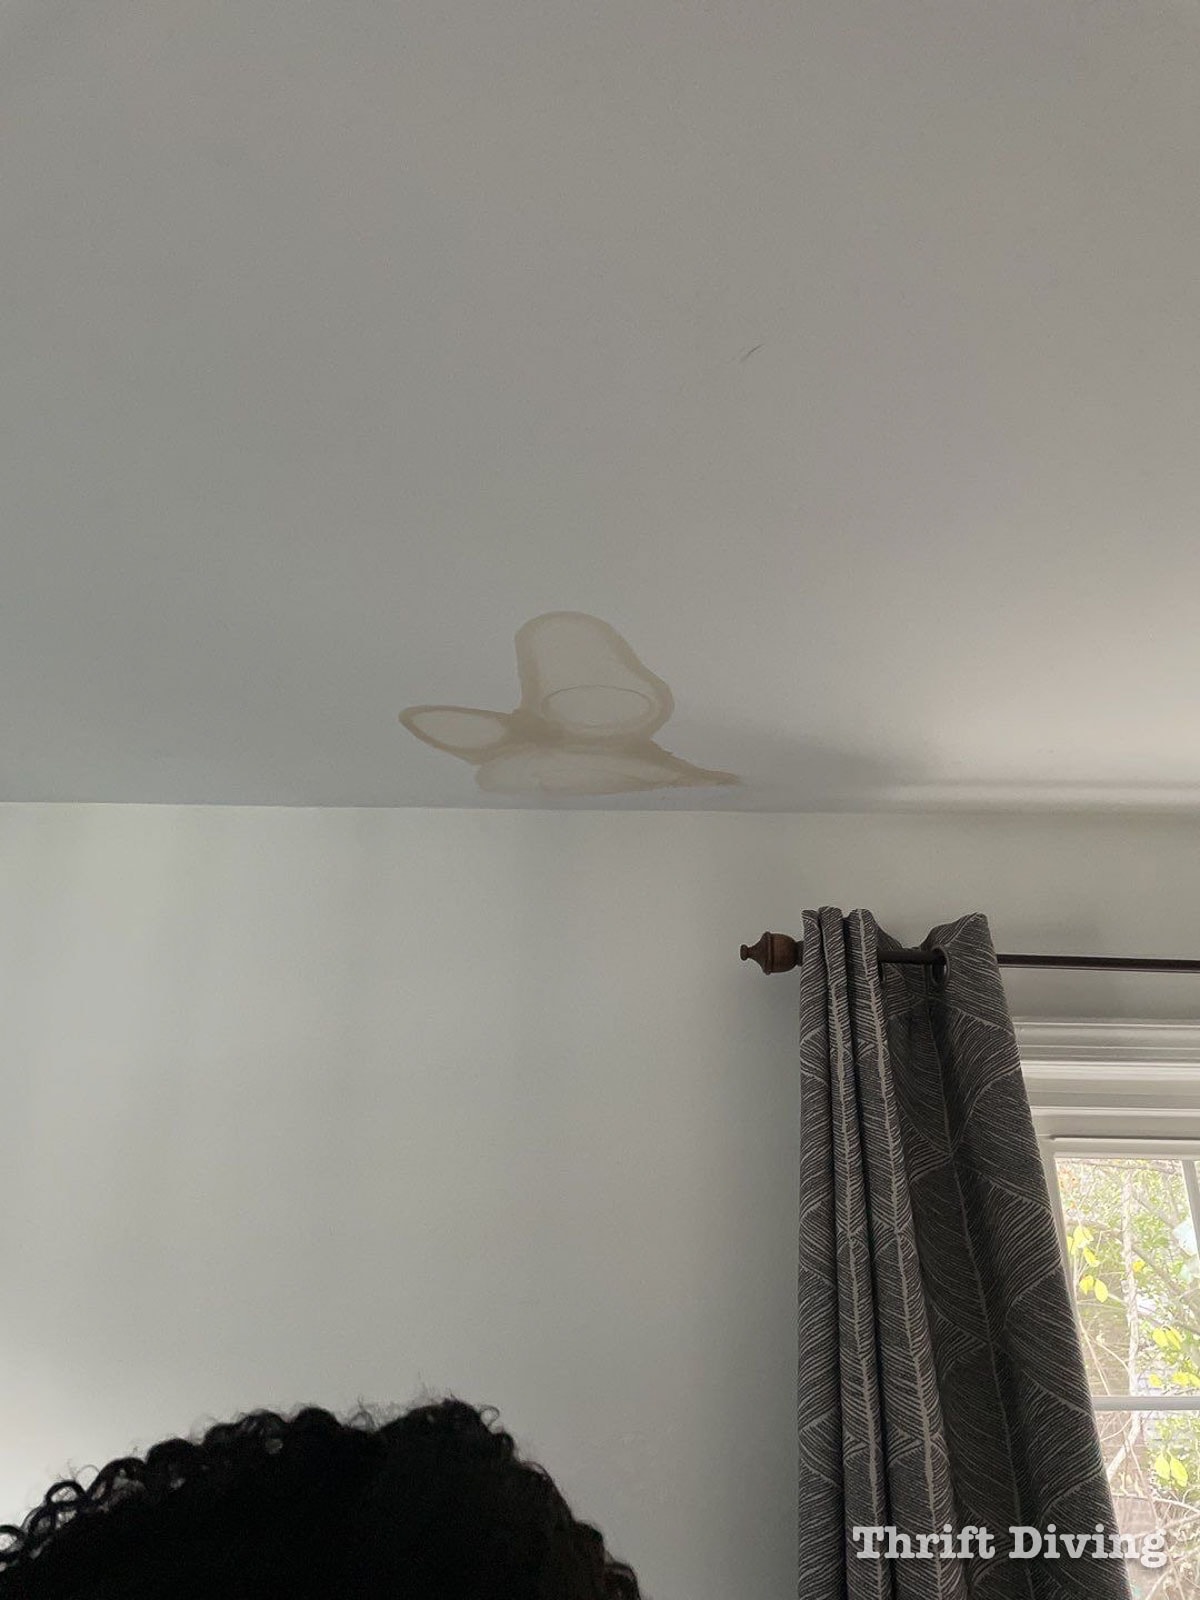 Leak stain on the ceiling. - 7 Home Maintenance Tasks - Thrift Diving